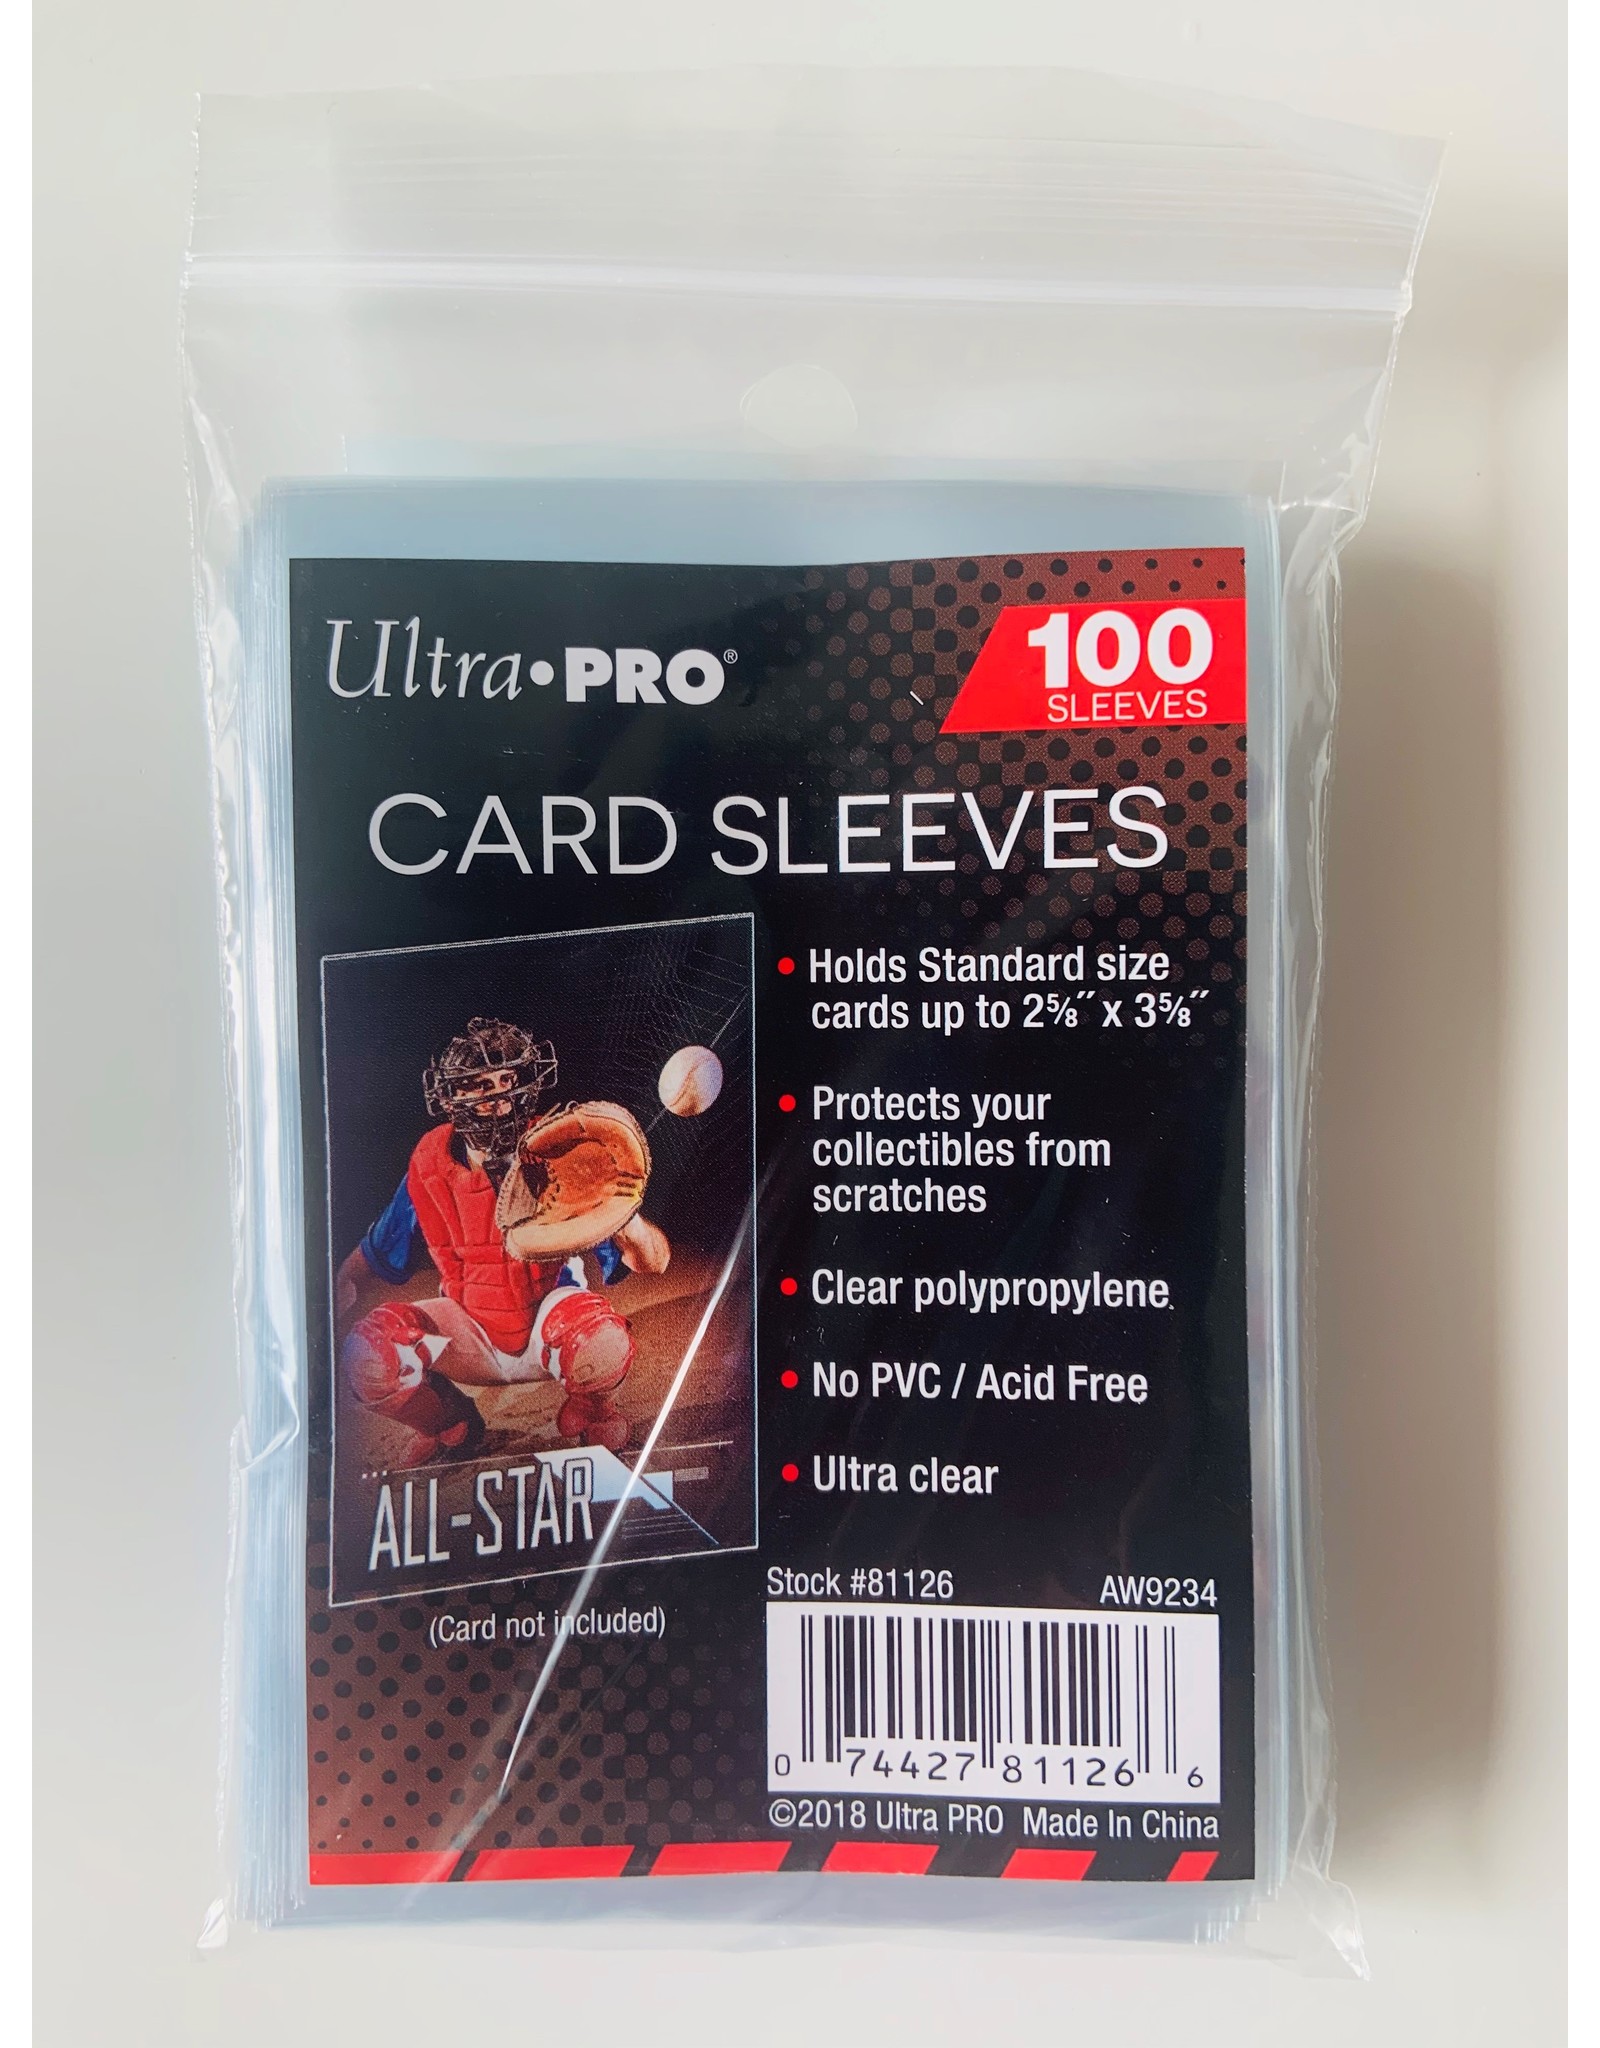 Ultra Pro Ultra Pro card sleeves